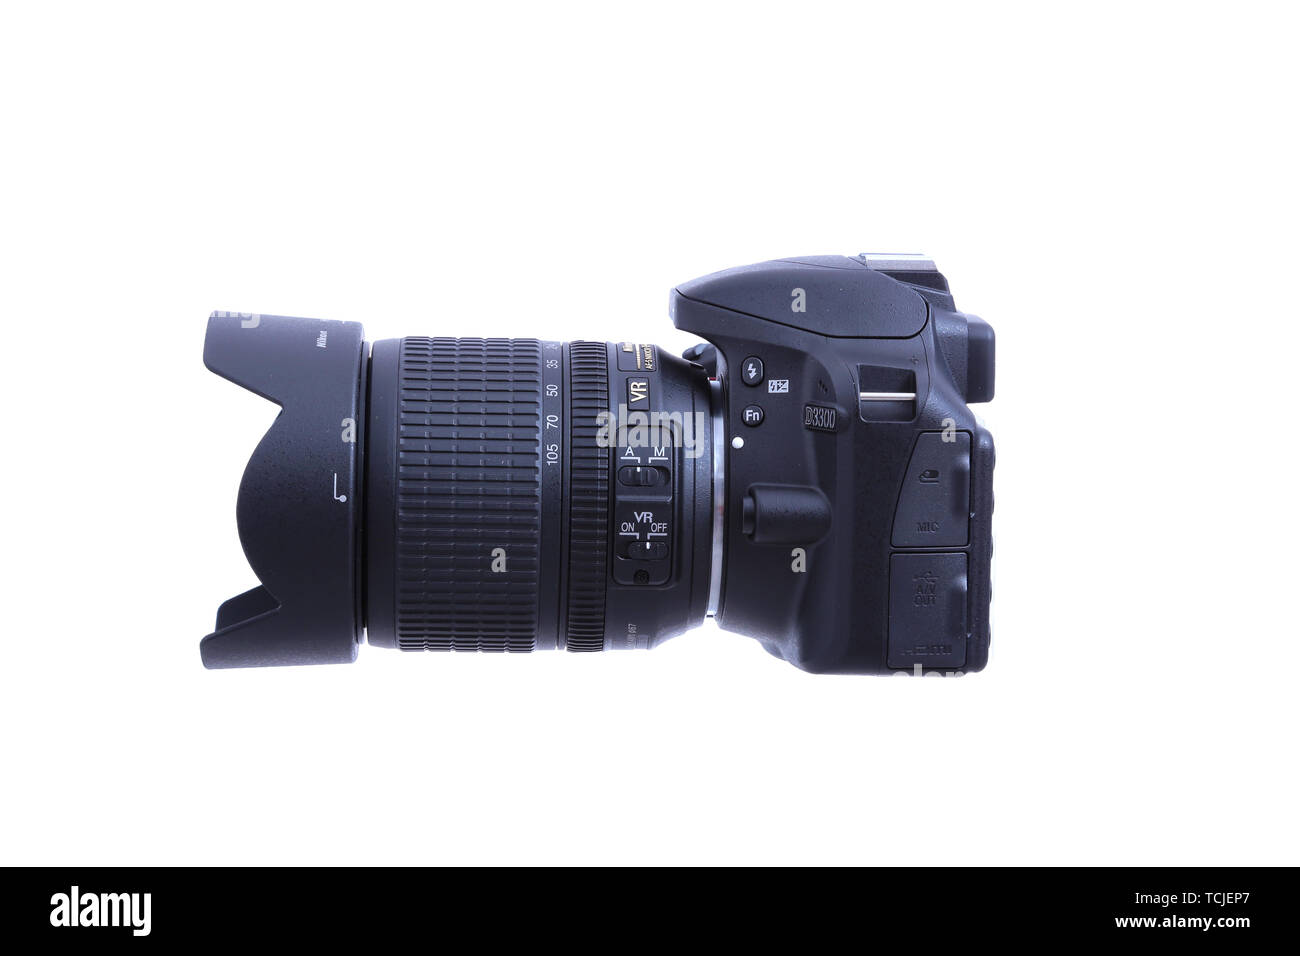 Kiev, UKRAINE - JULE 10, 2015 : Nikon D3300 avec objectif 18-105mm Nikkor  sur fond blanc Photo Stock - Alamy